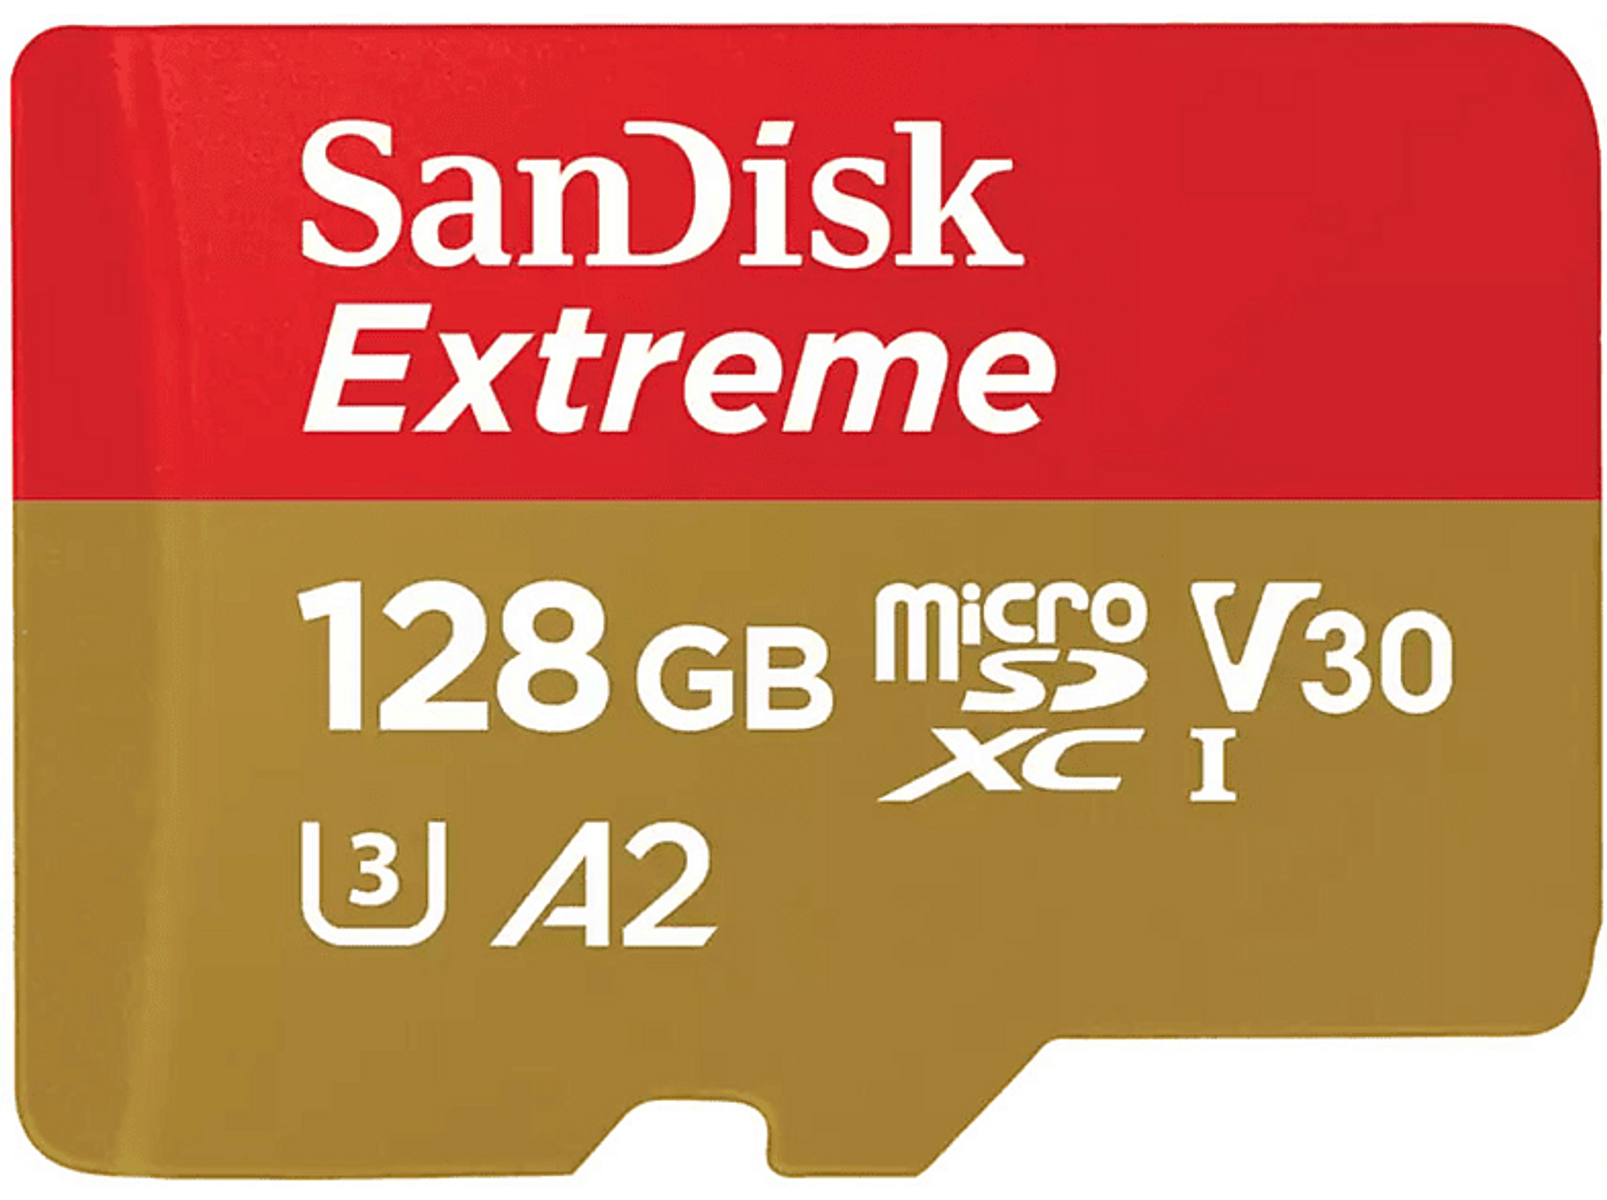 WESTERN DIGITAL A Micro-SD card, 984466, MB/s Memory 190 128 GB